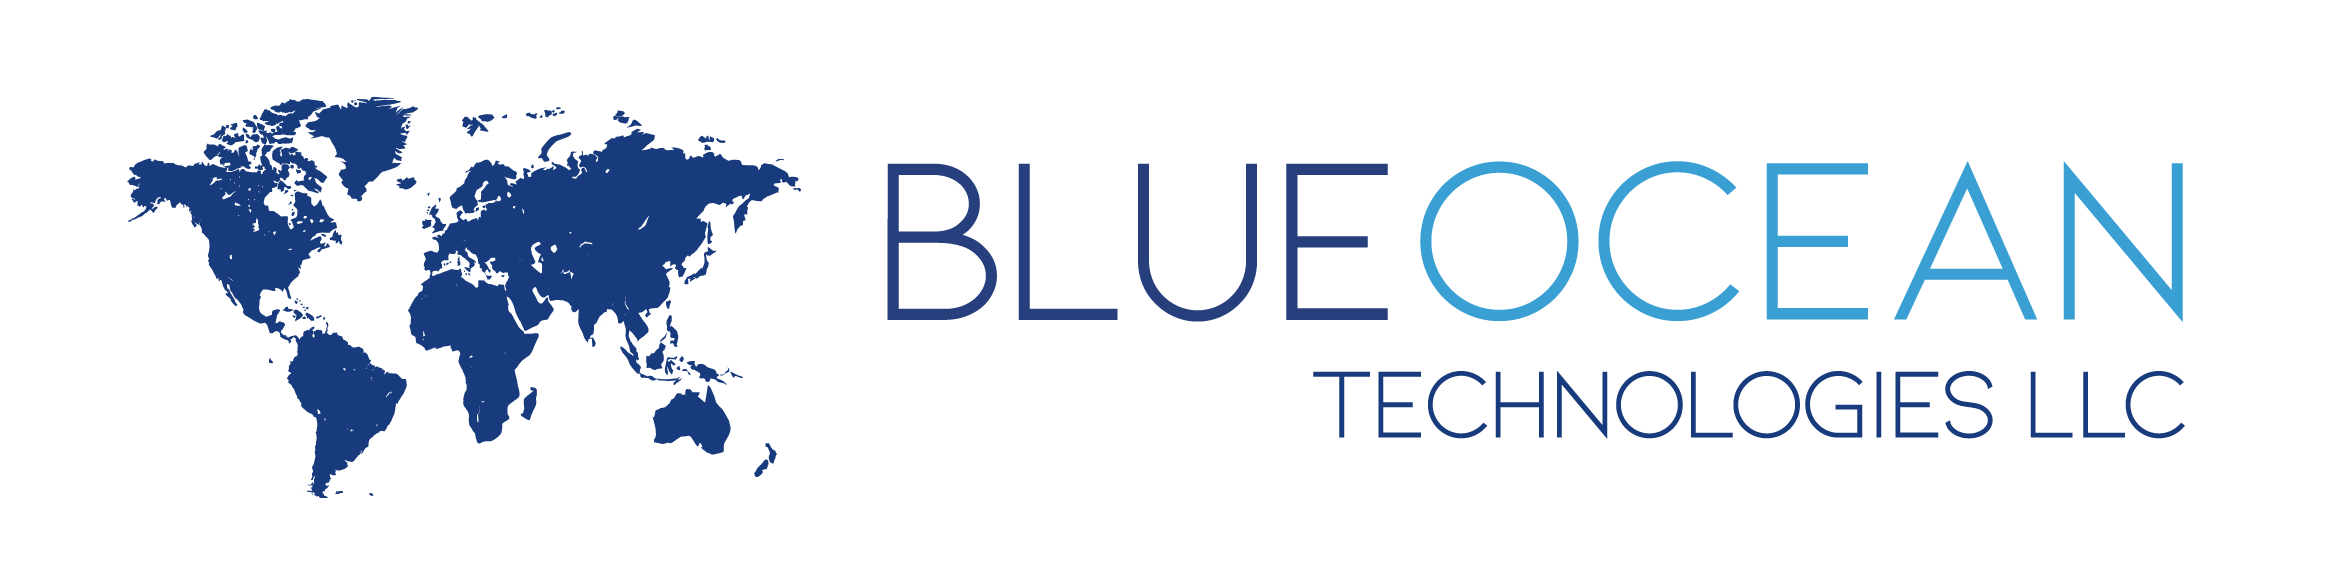 Blue Ocean Technologies LLC (Prod)